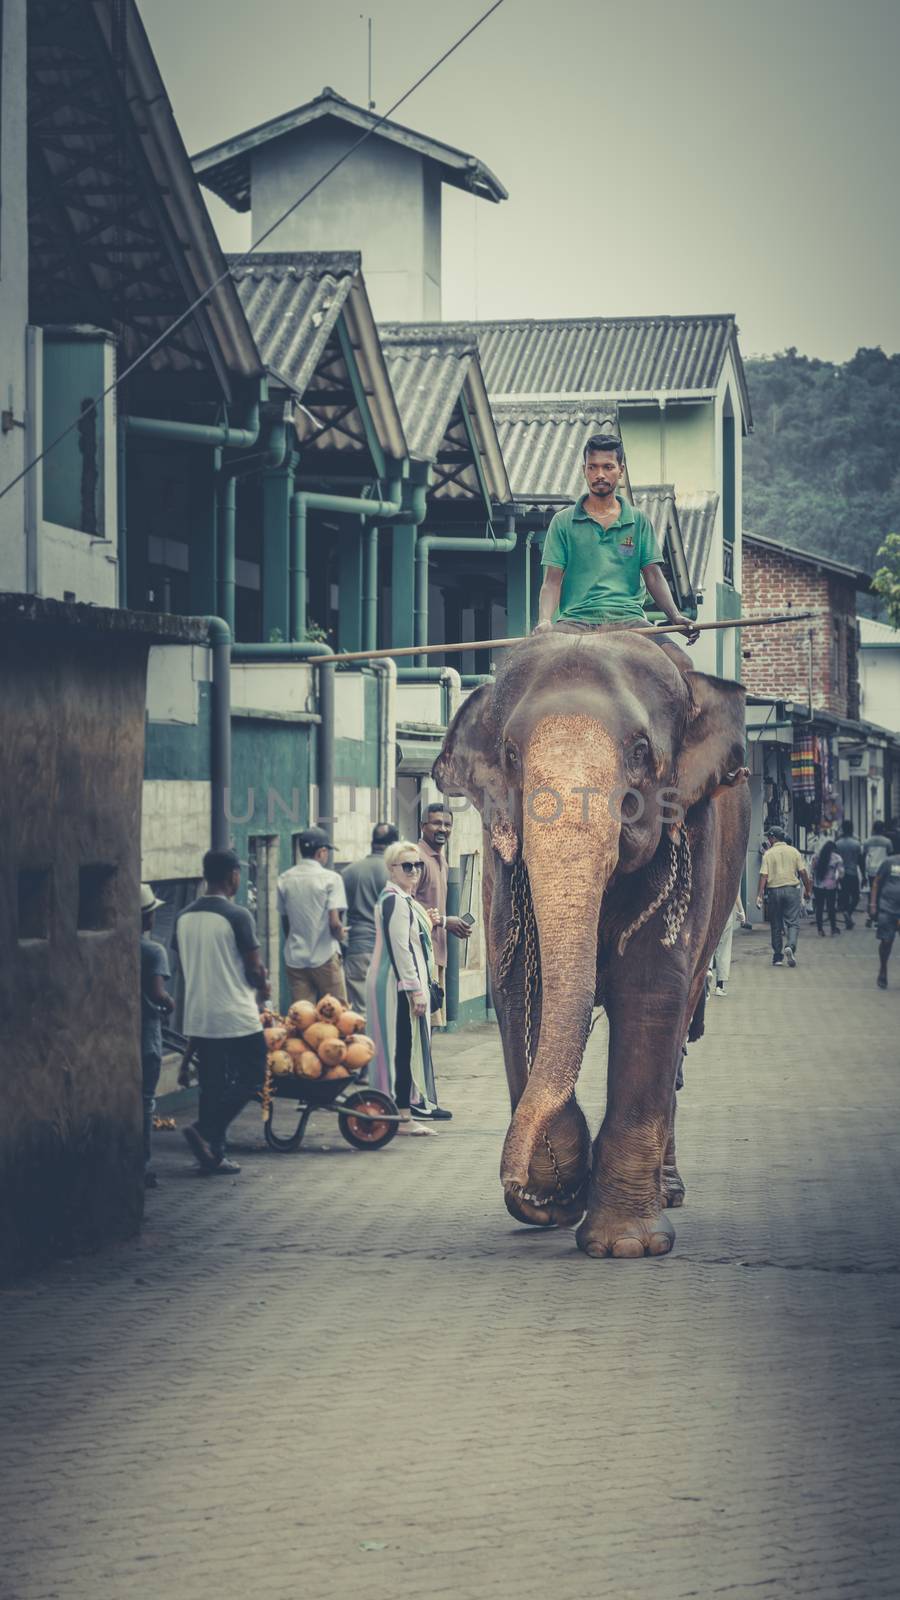 Riding an elephant in a street Sri Lanka by nilanka